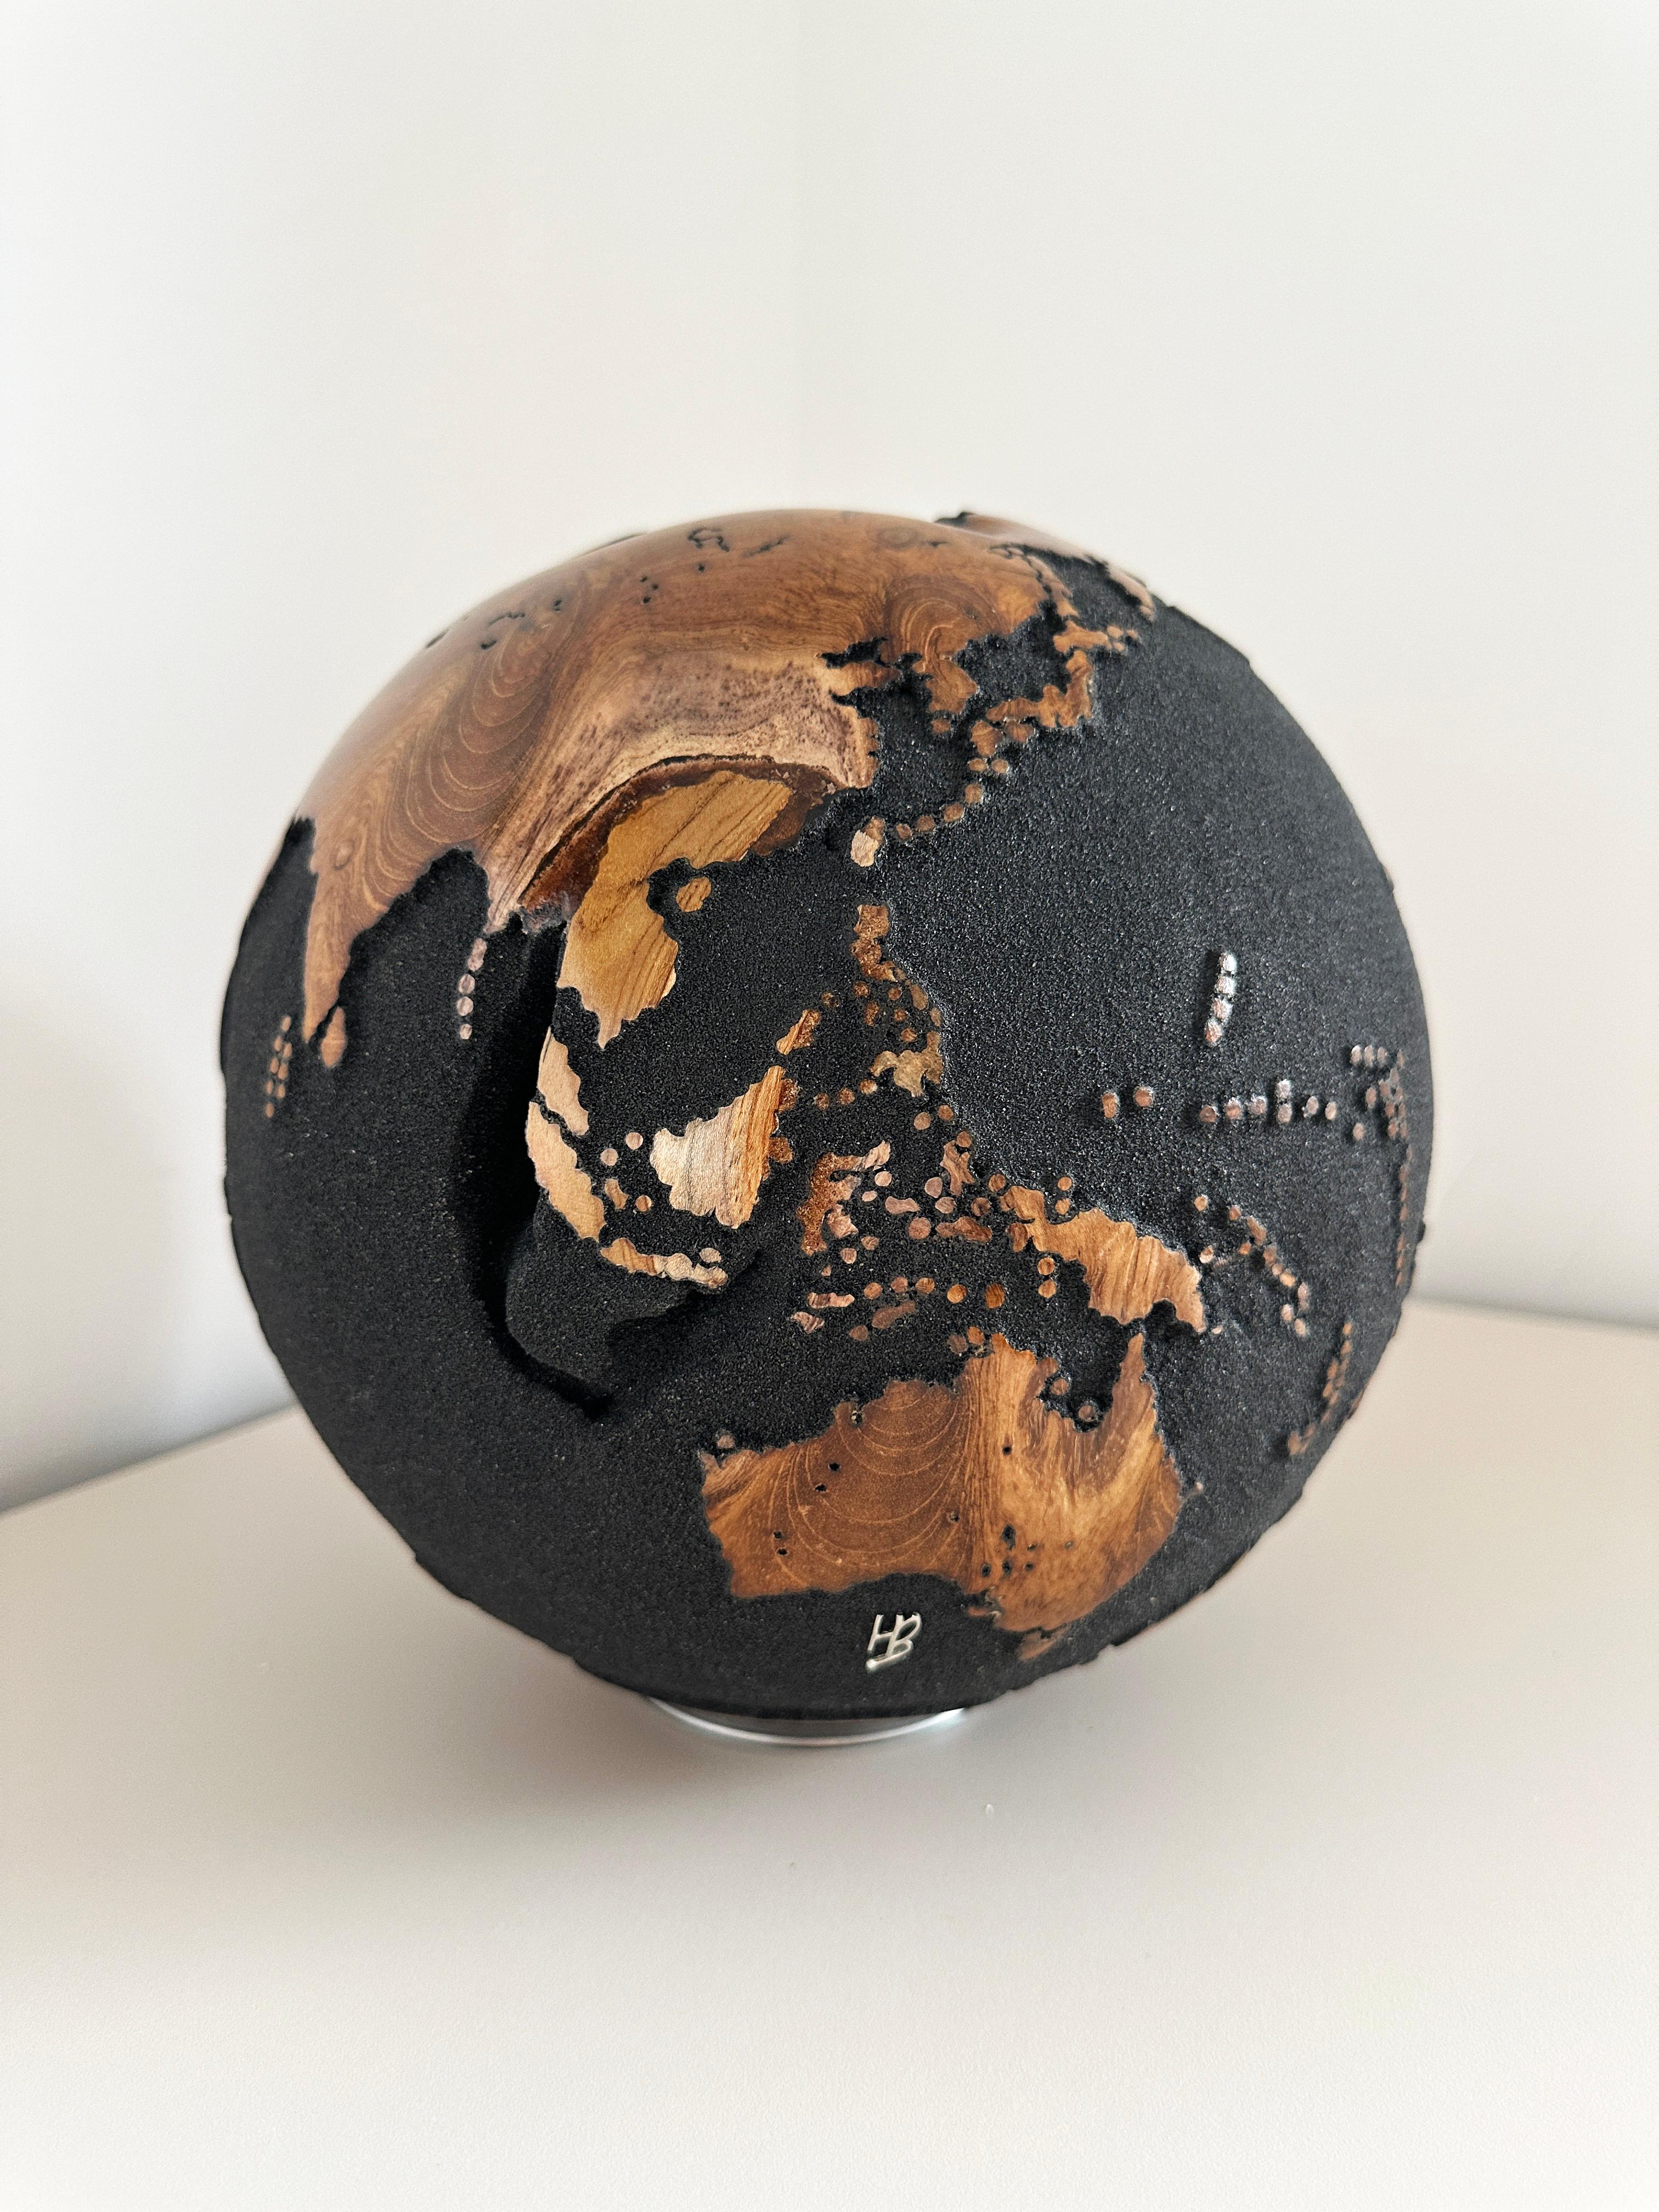 Around the Globe Black Teak by Bruno Helgen - wood globe sculpture  For Sale 5